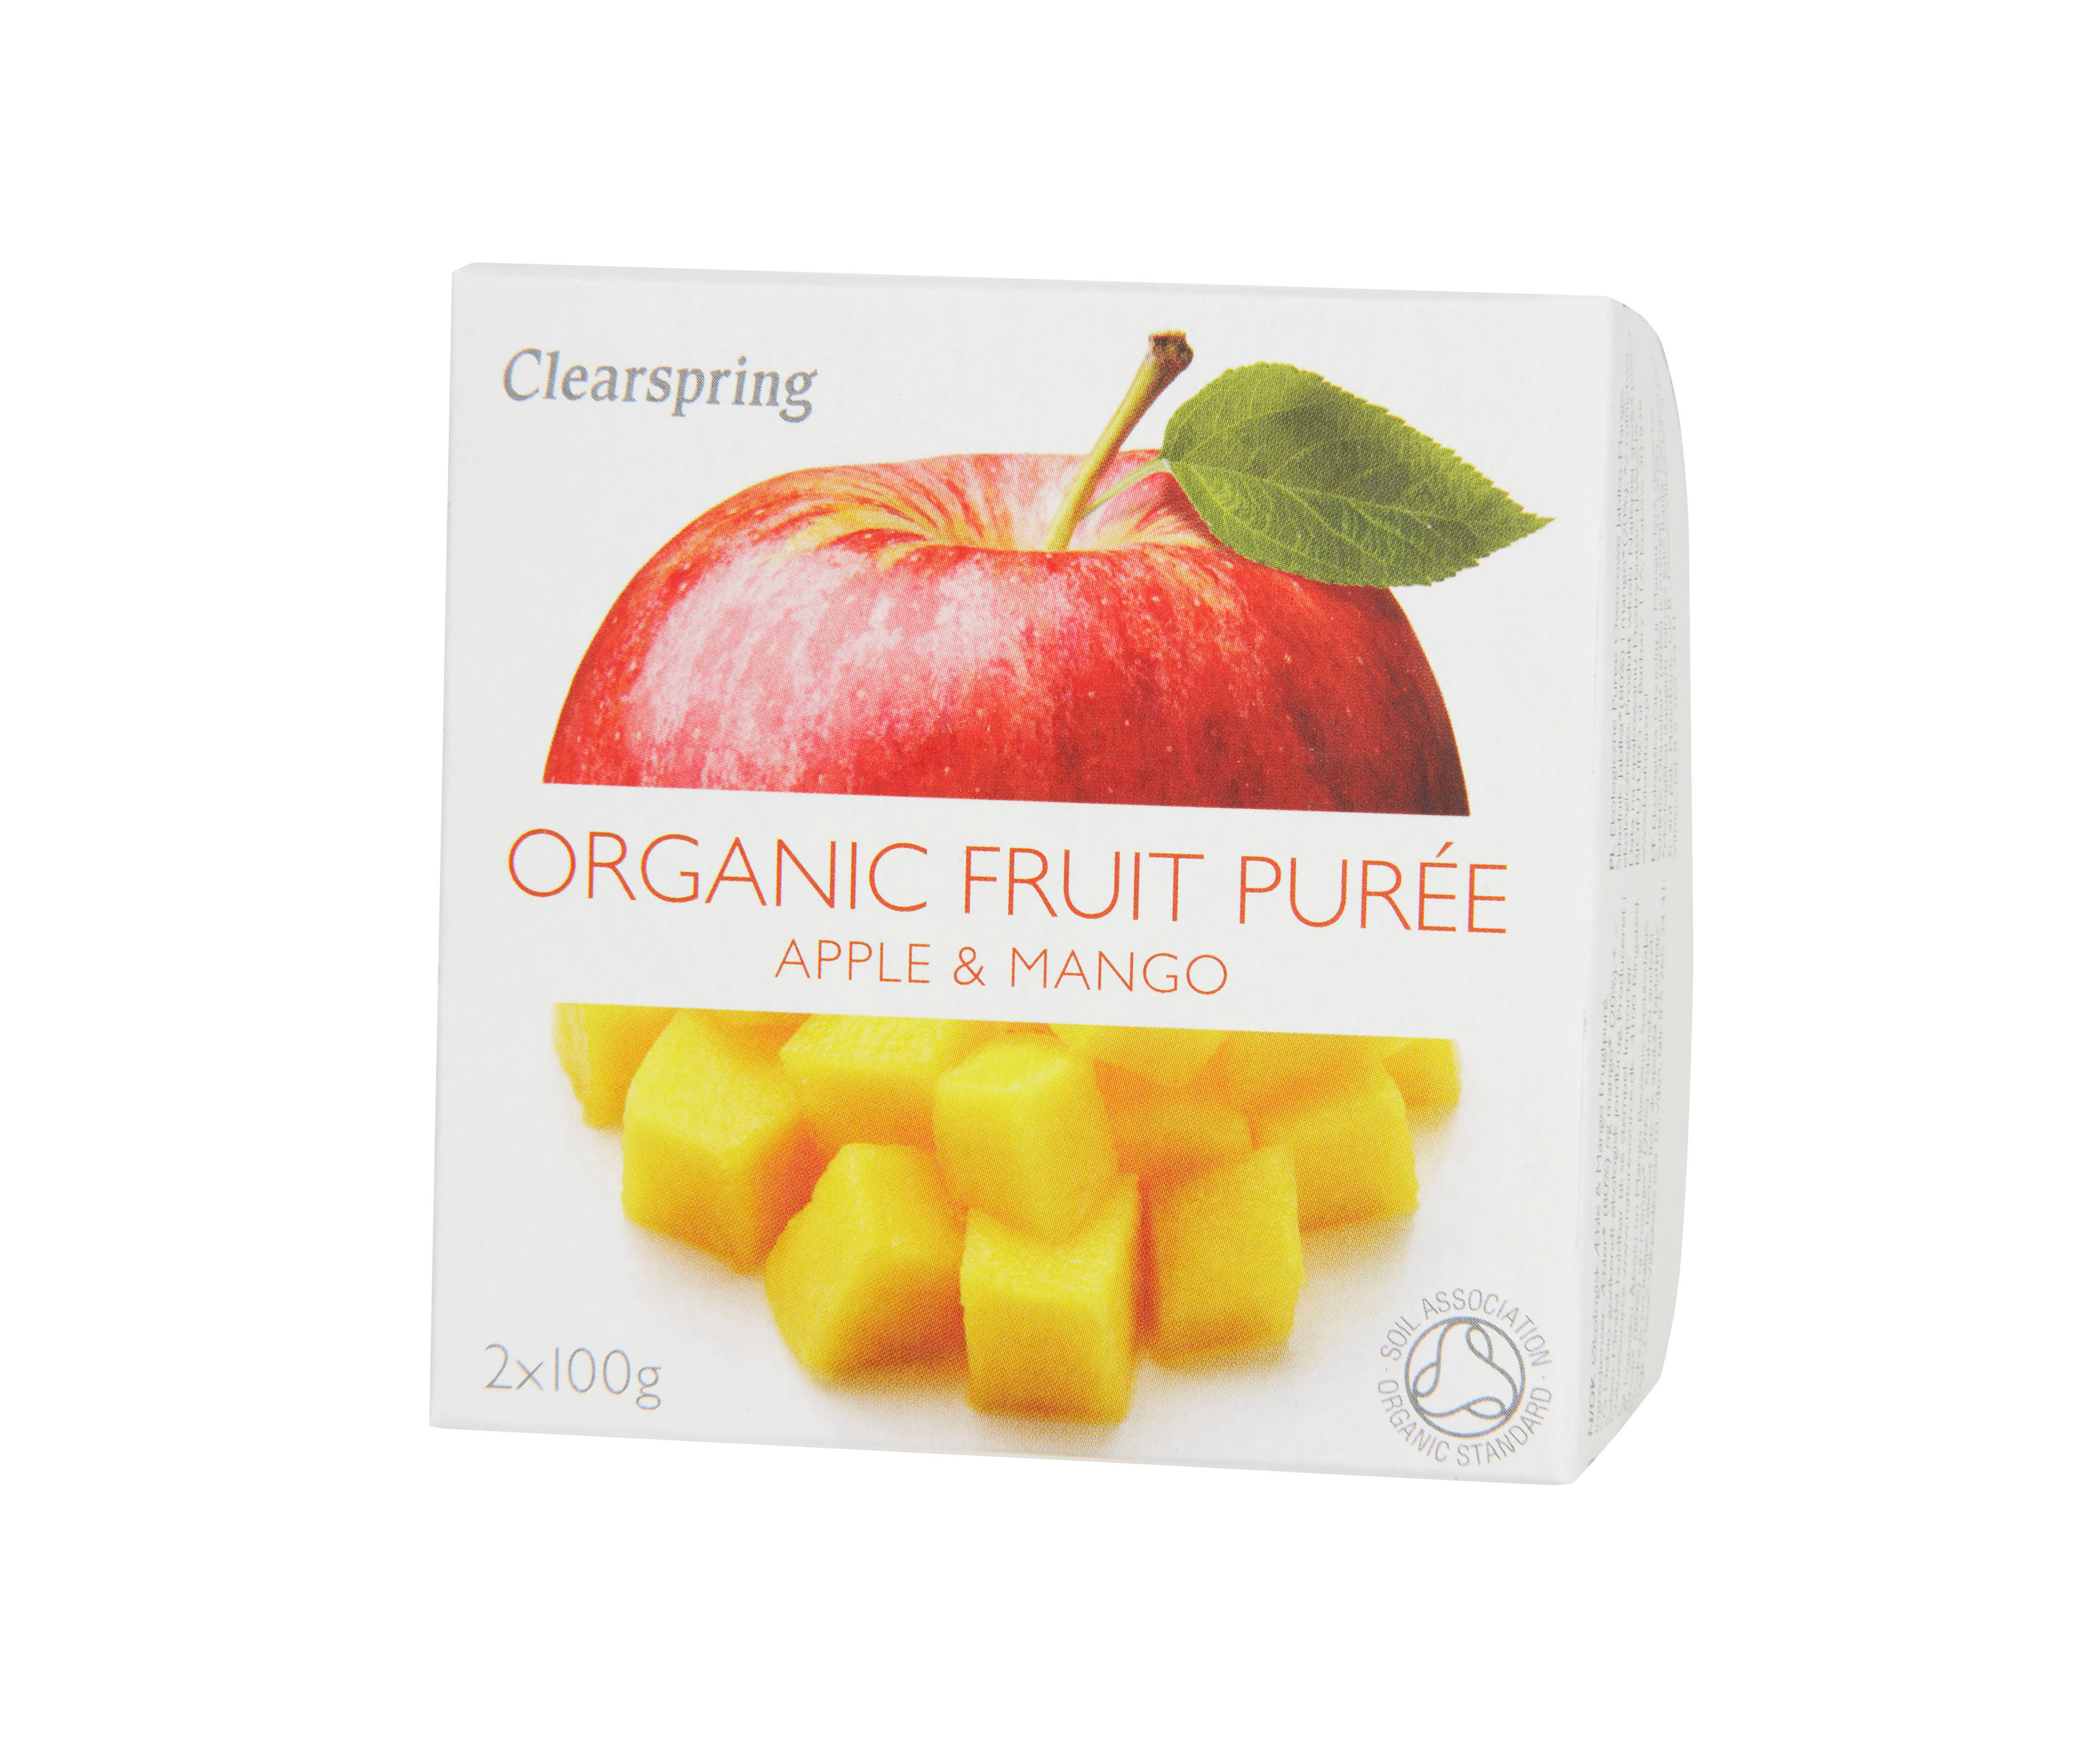 Clearspring Organic Fruit Purée - Apple & Mango, 2pk, 100g